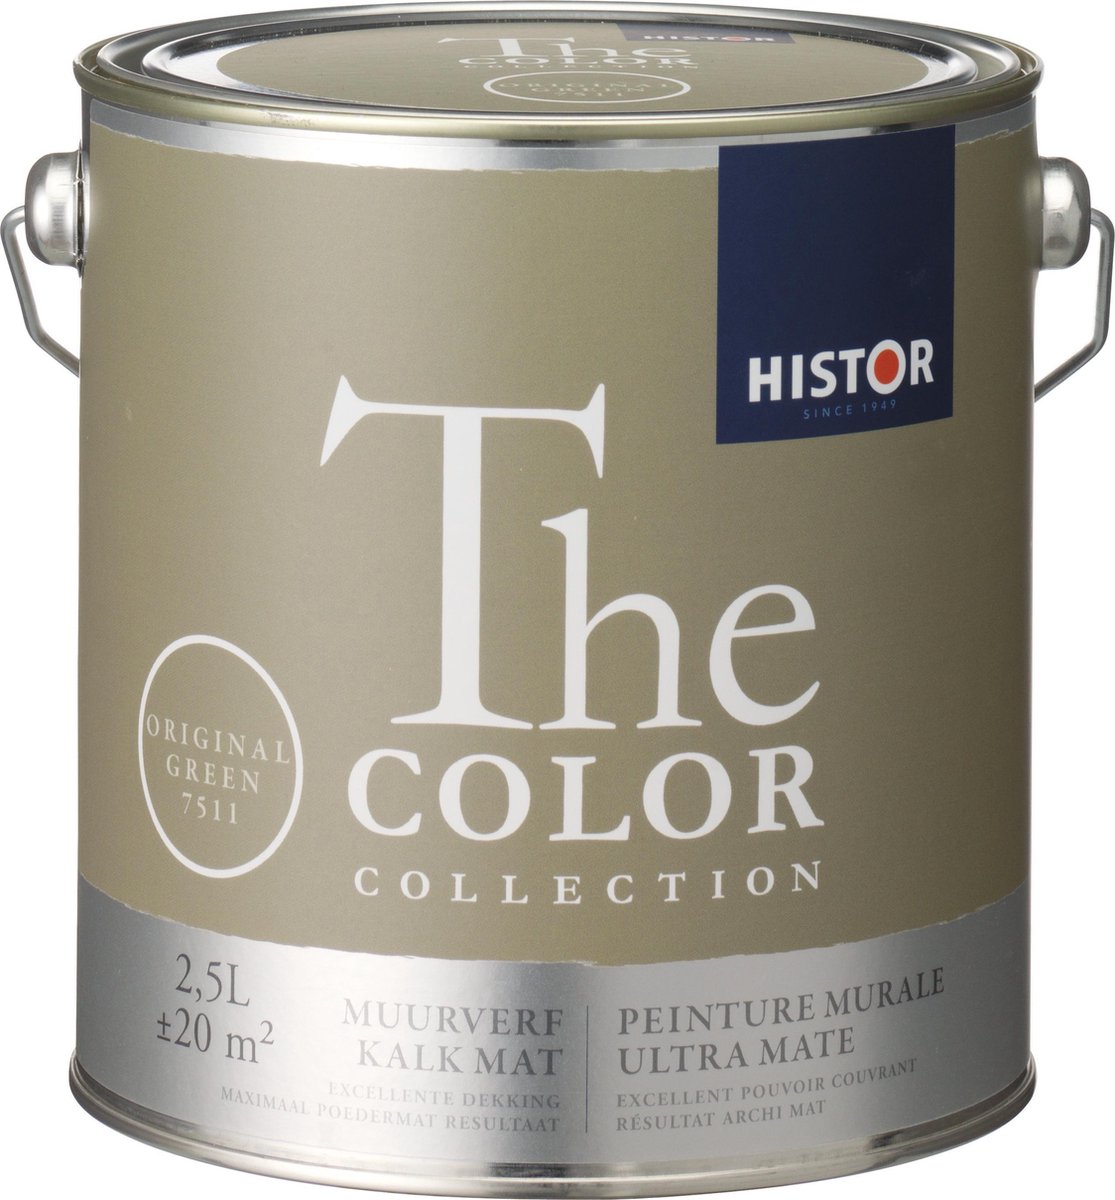 markt Bloody betaling Histor The Color Collection Muurverf - 2,5 Liter - Original Green | bol.com